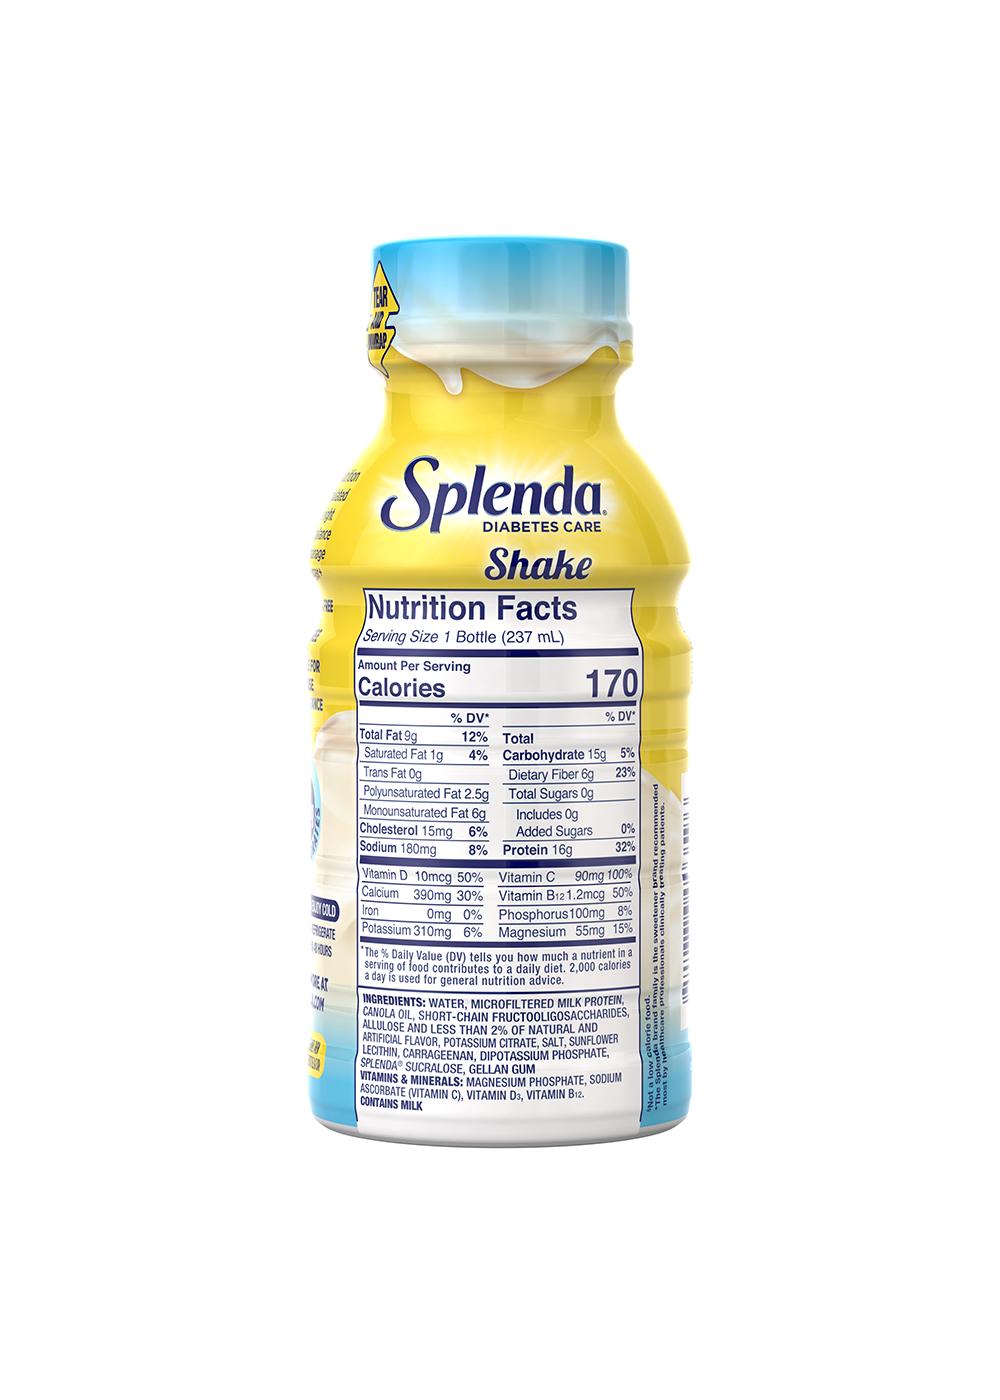 Splenda Diabetes Care French Vanilla Shake 8 oz Bottles; image 2 of 5